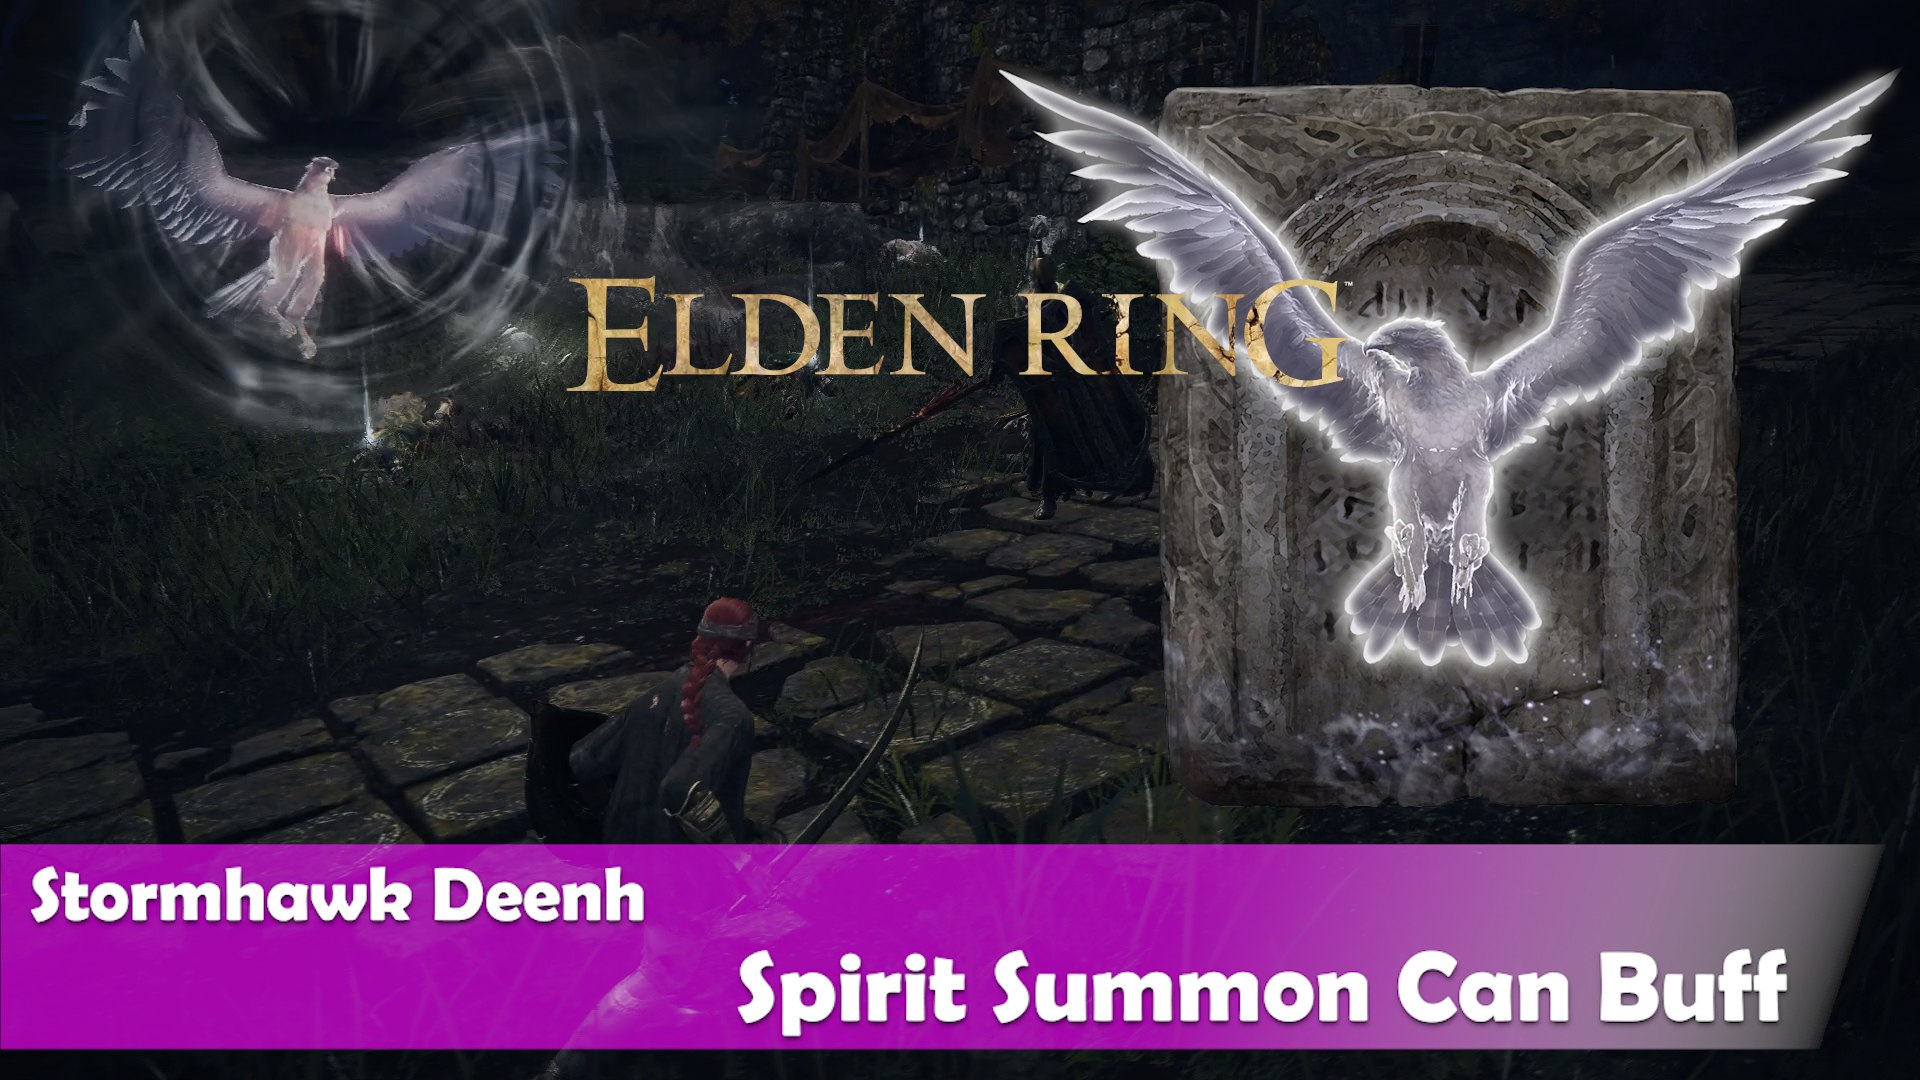 Elden Ring - Redmane Knight Ogha Ashes Legendary Summon Location - video  Dailymotion